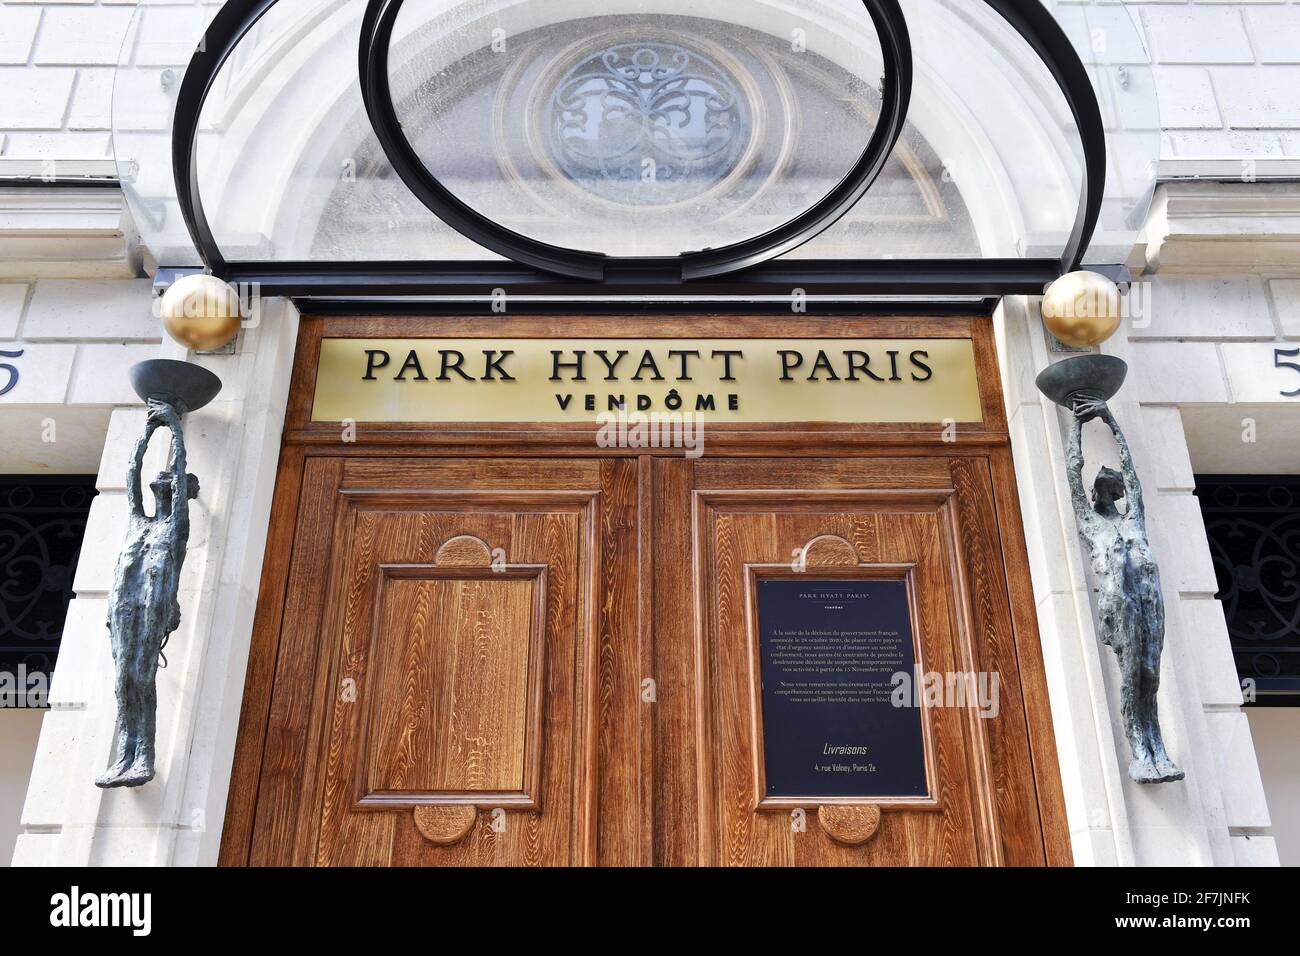 Entrance of Park Hyatt Paris Hotel - Paris - France Stock Photo